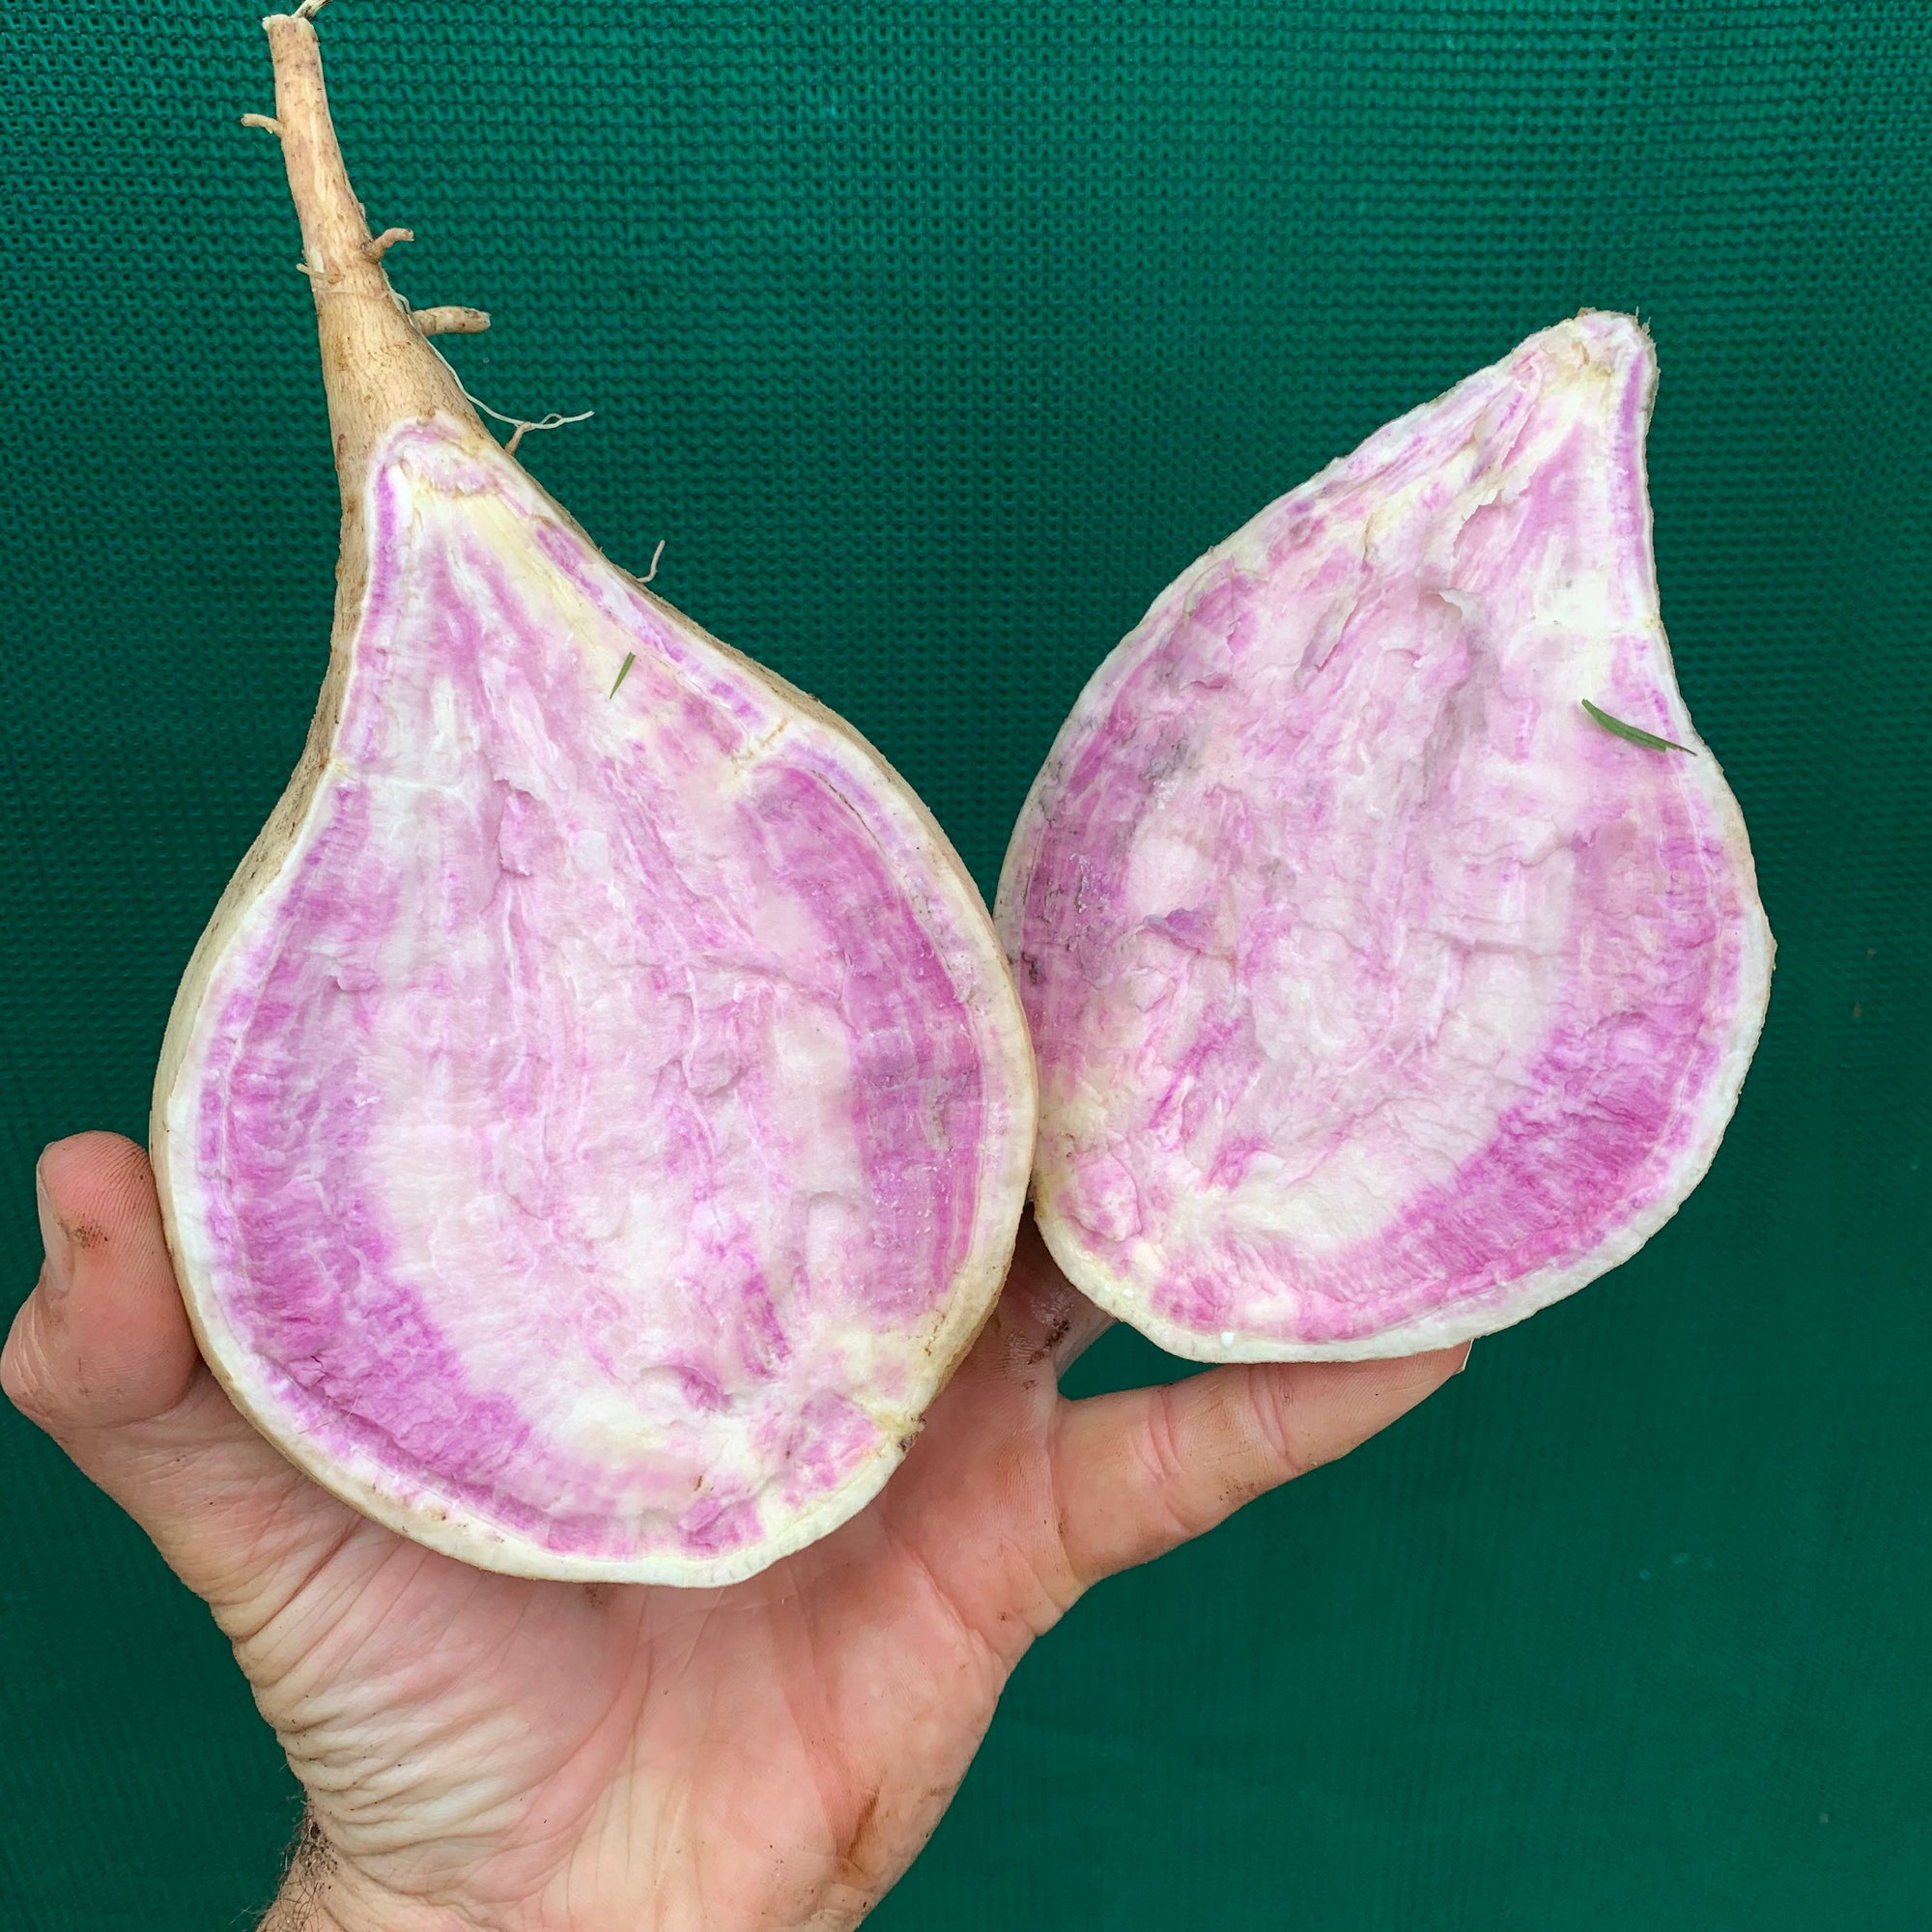 Sweet Potato ‘Hawaiian Purple’